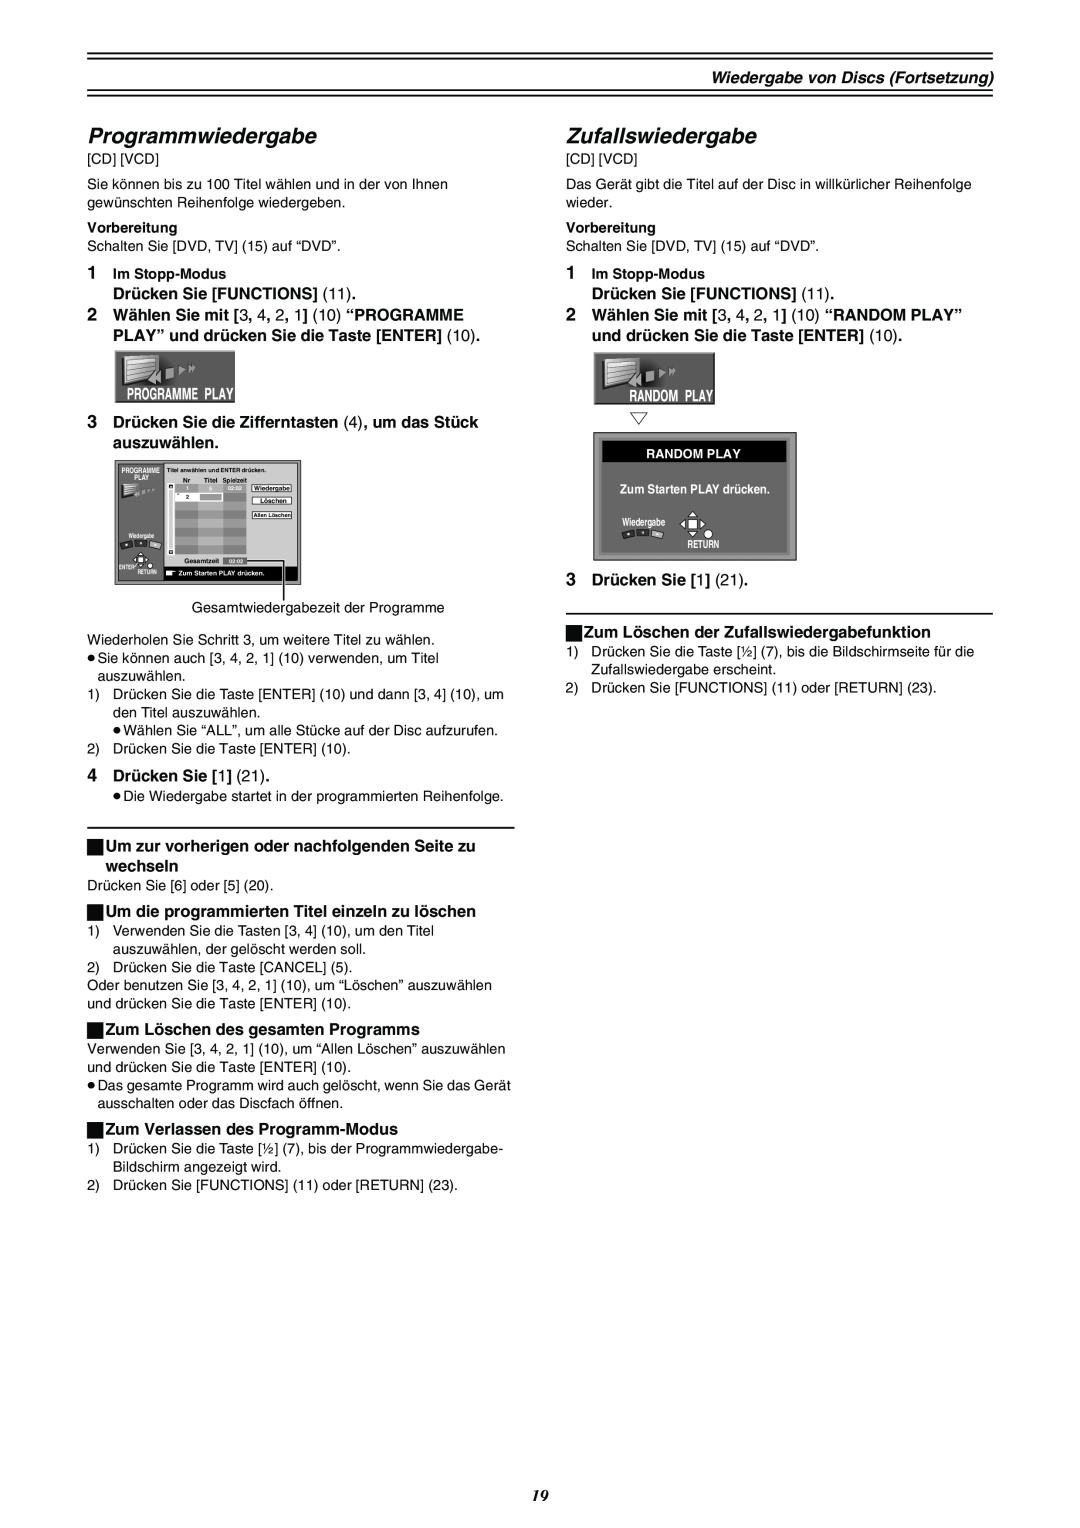 Panasonic DMR-E30 manual Programmwiedergabe, Zufallswiedergabe, RANDOM PLAY Zum Starten PLAY drücken 